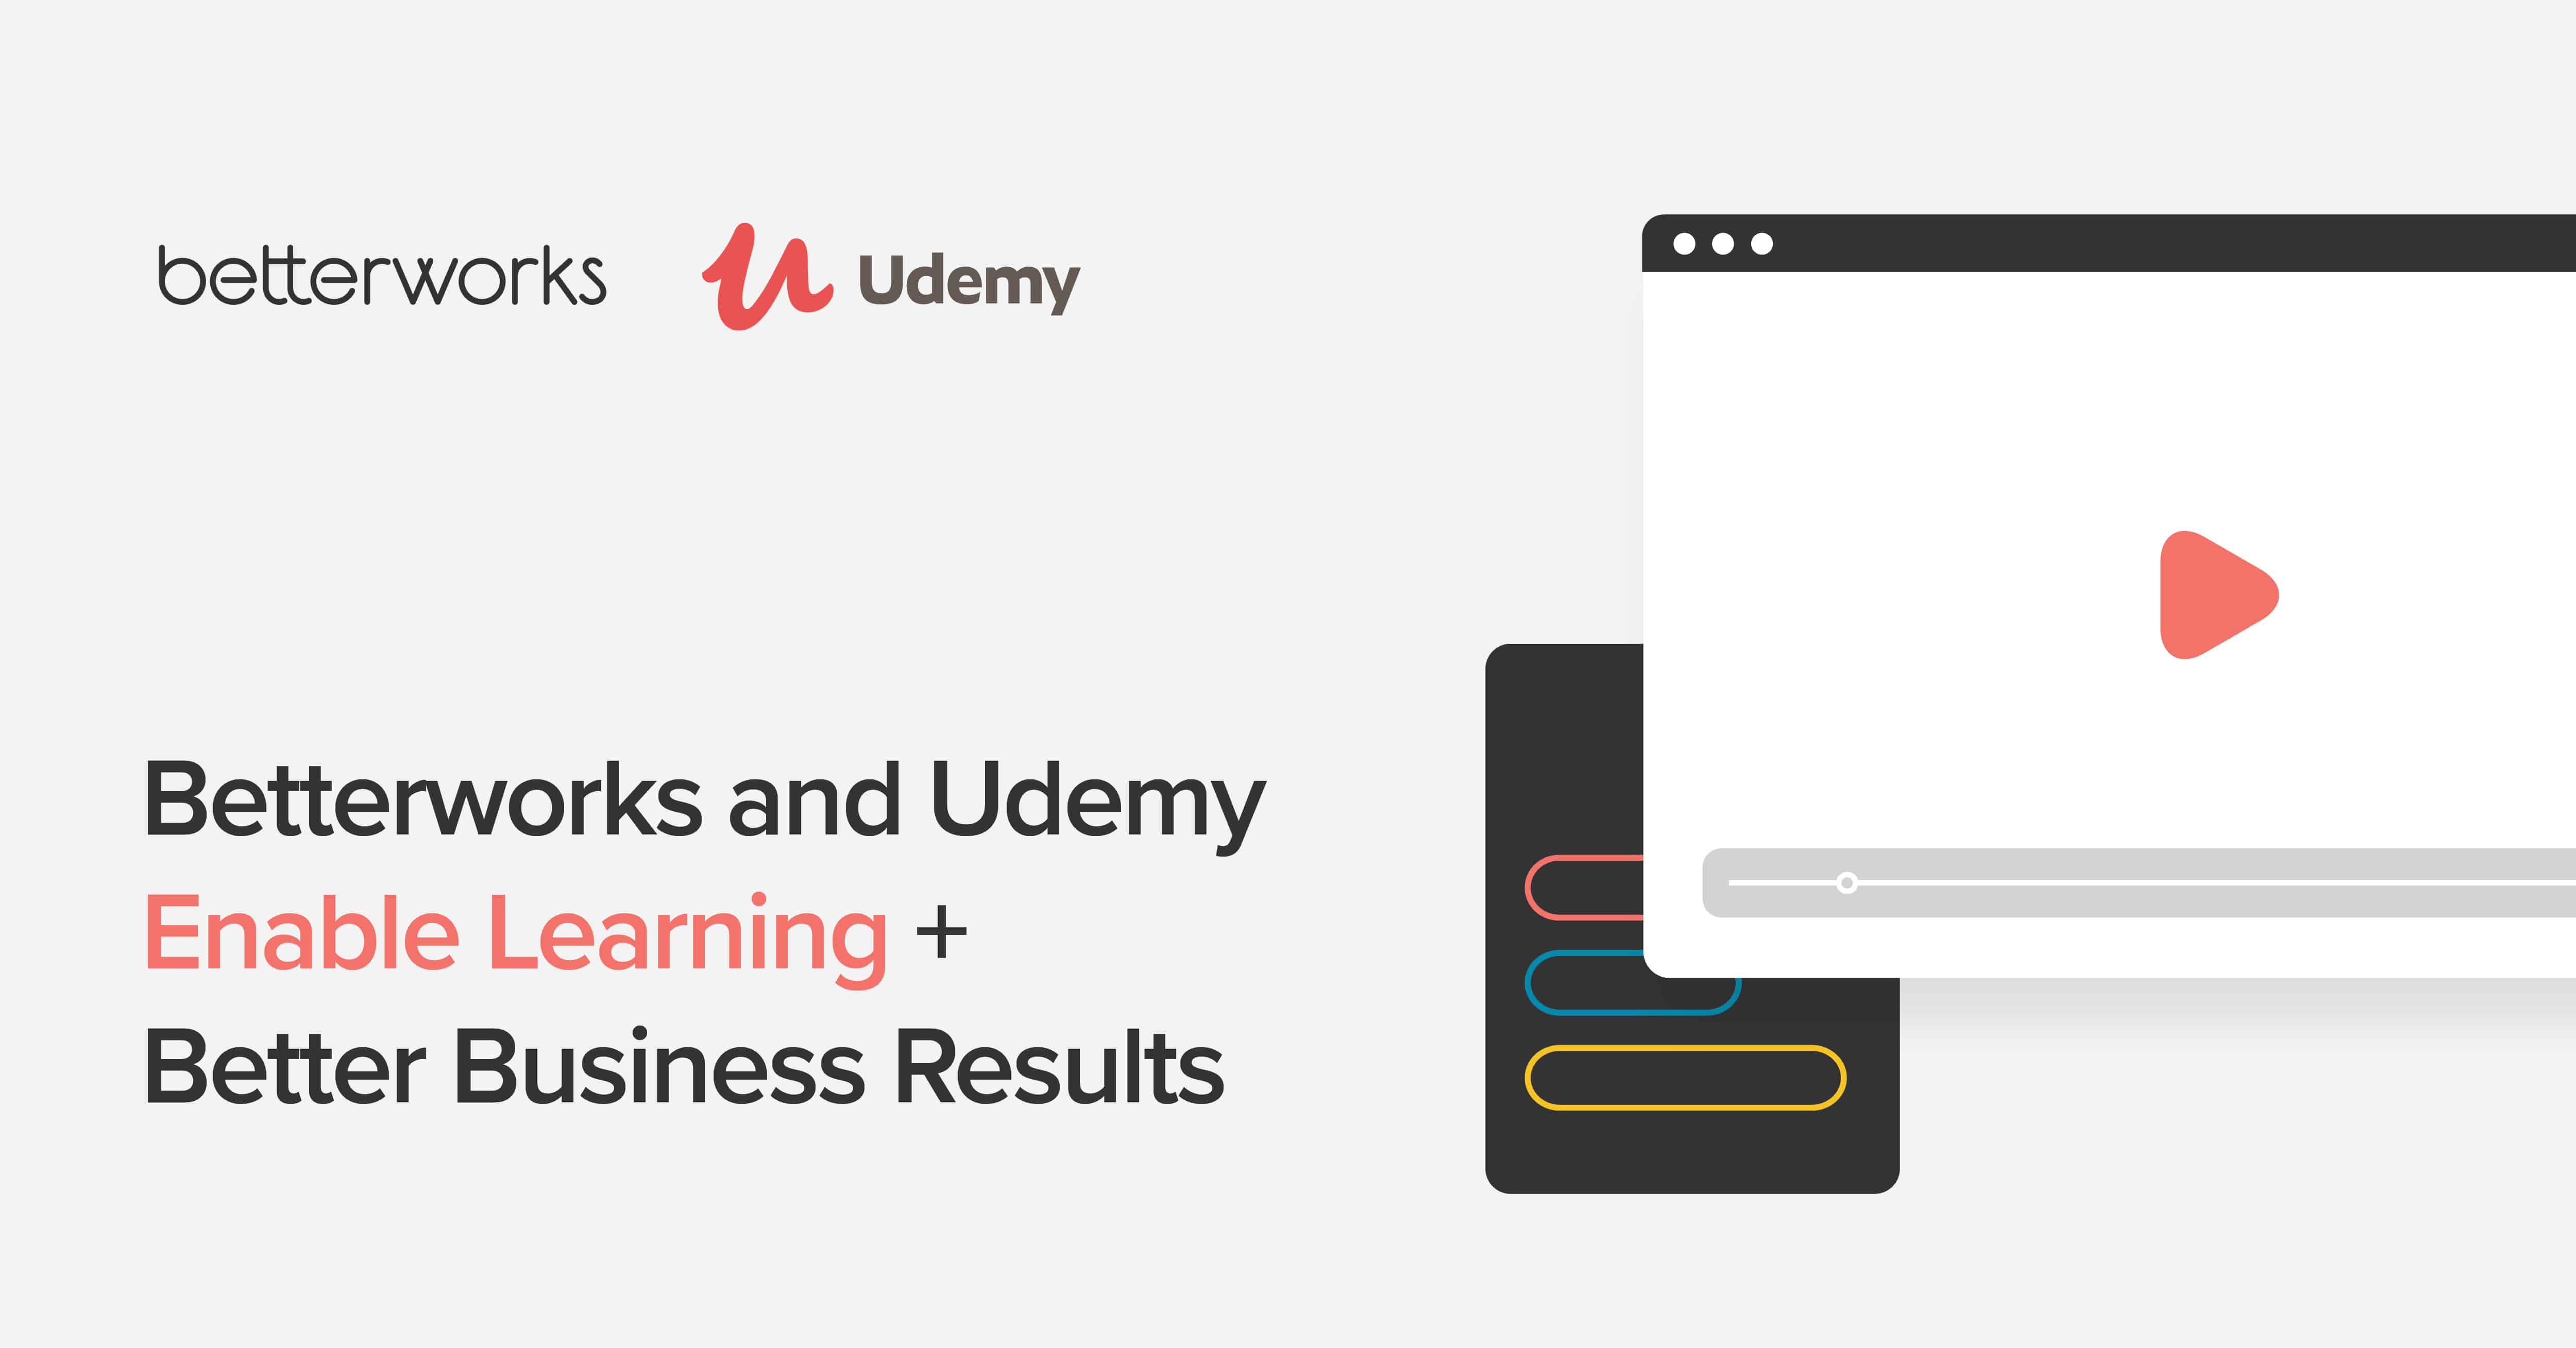 udemy business case study